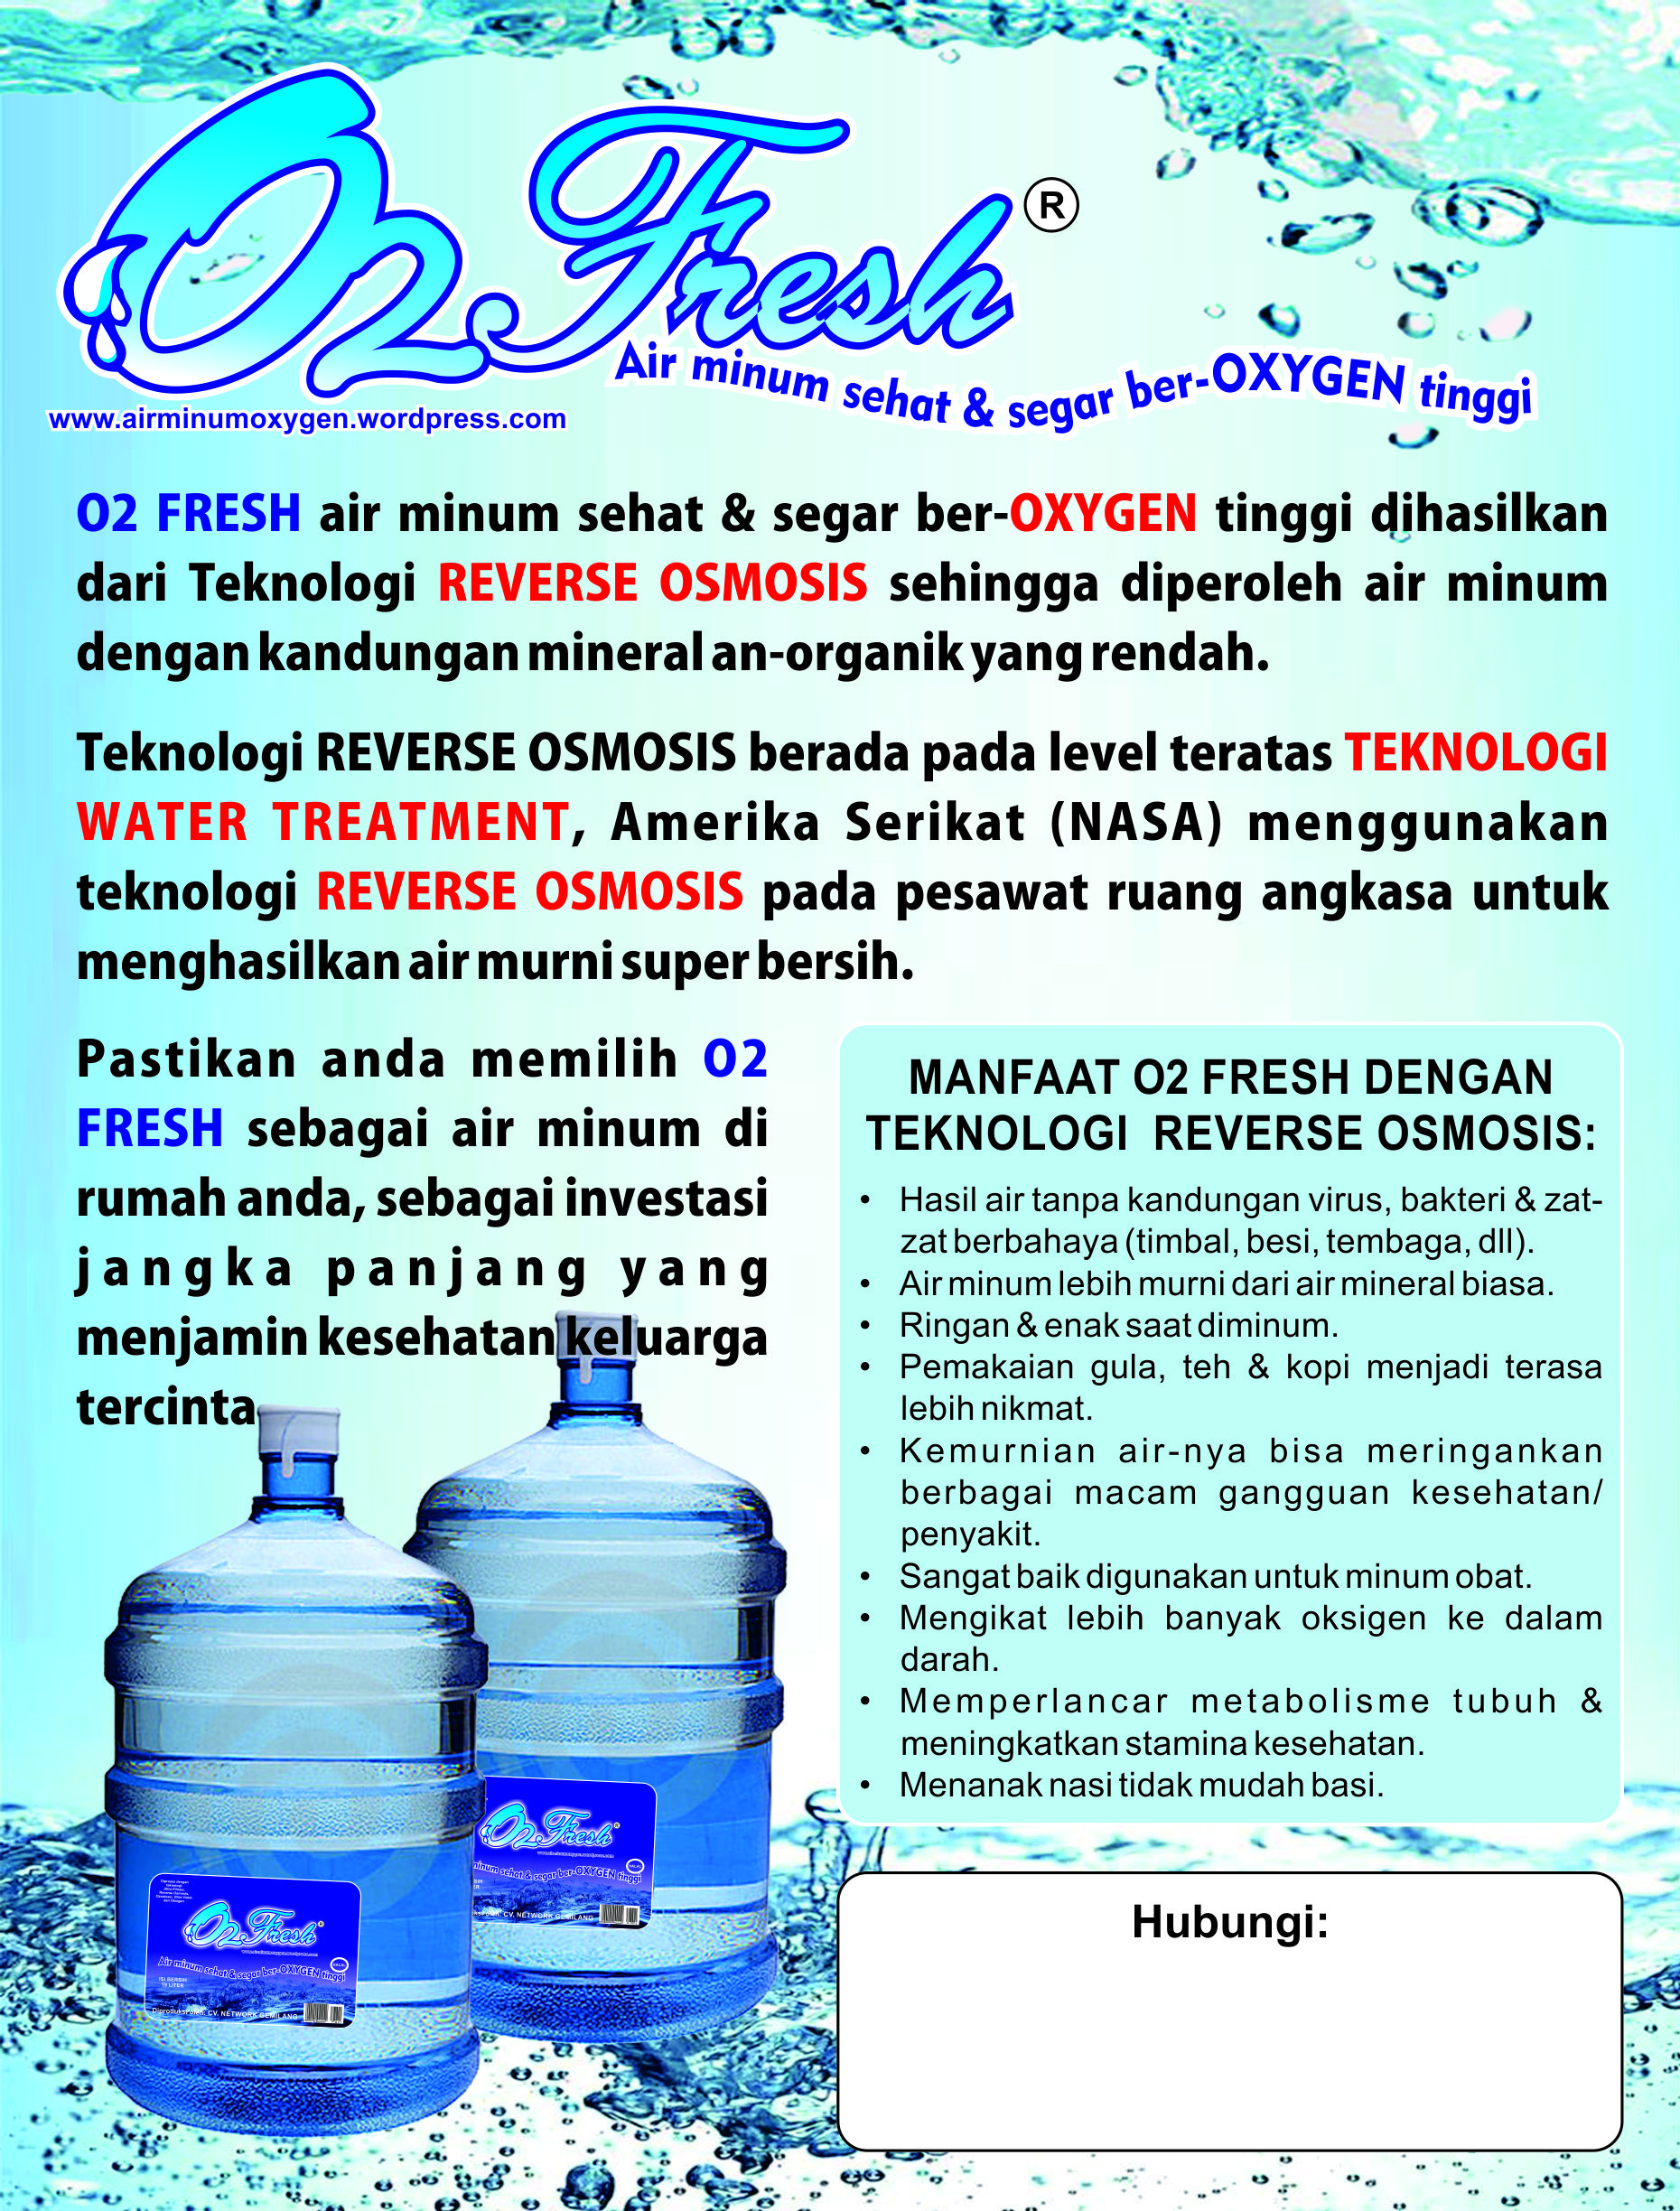 Bisnis air minum isi ulang  air minum oxygen